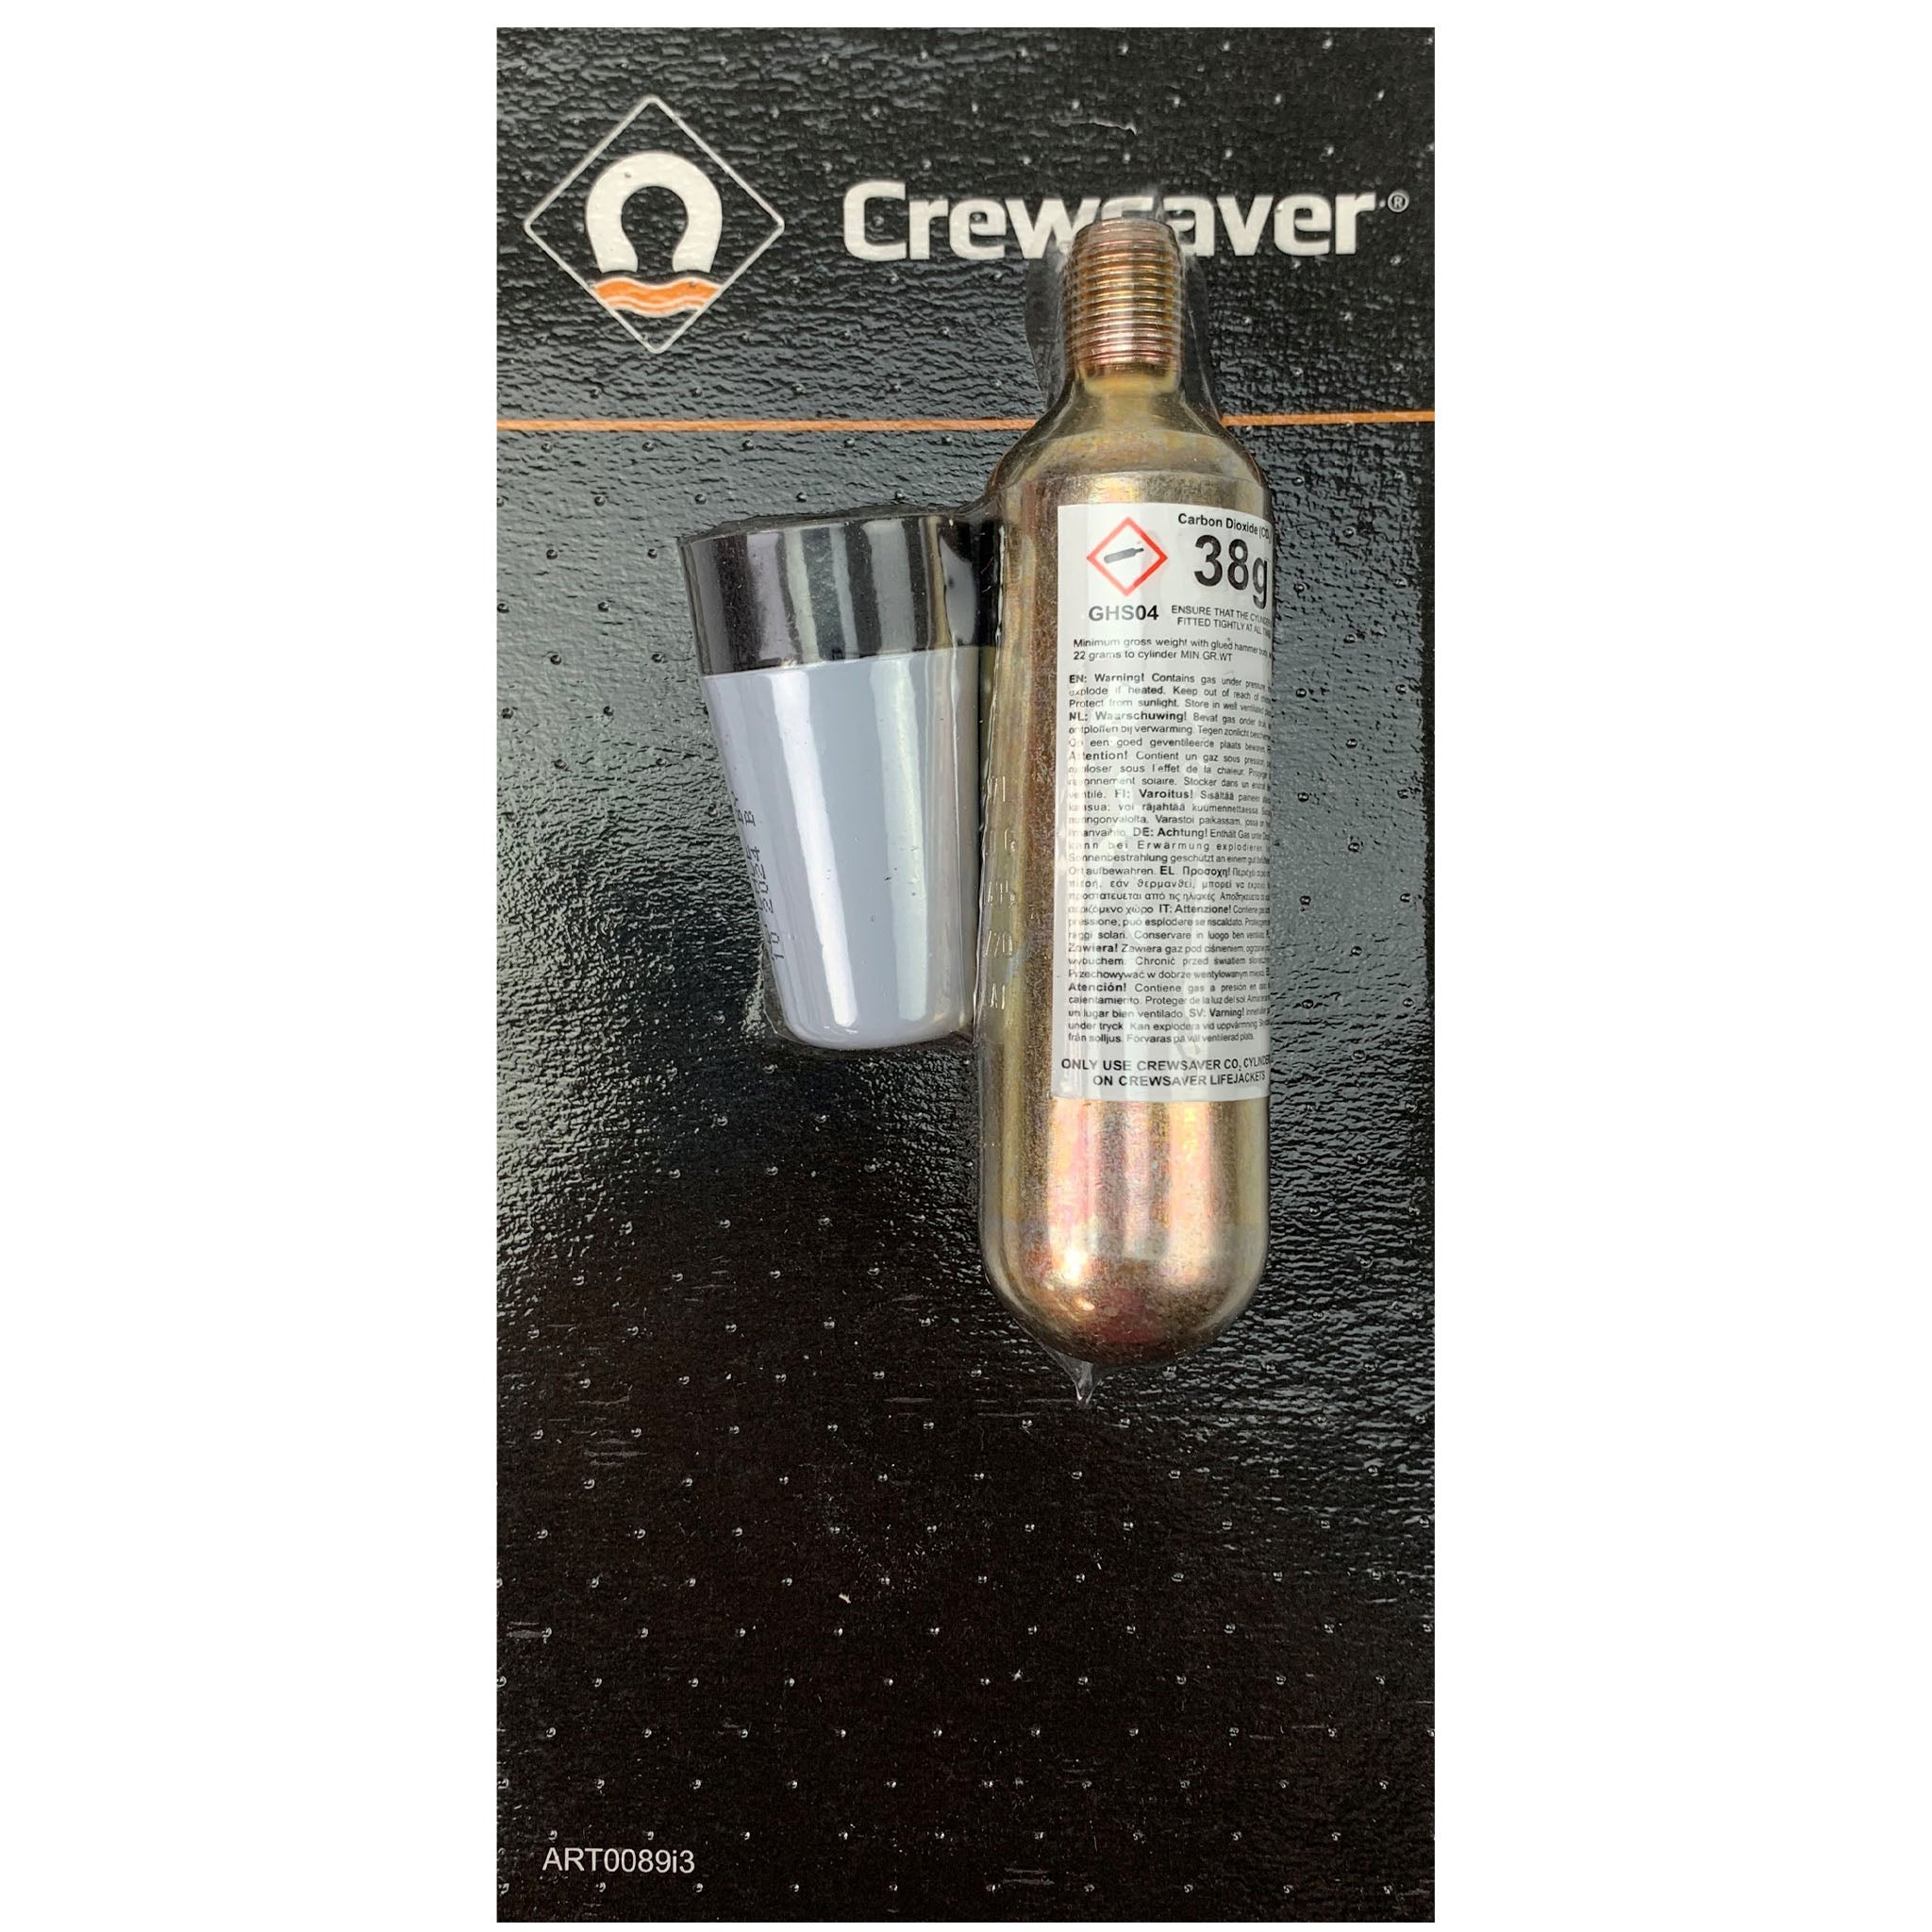 Crewsaver Pro Sensor Elite Re-Arming Kit for Ergofit 190N & Crewfit 180N Lifejacket